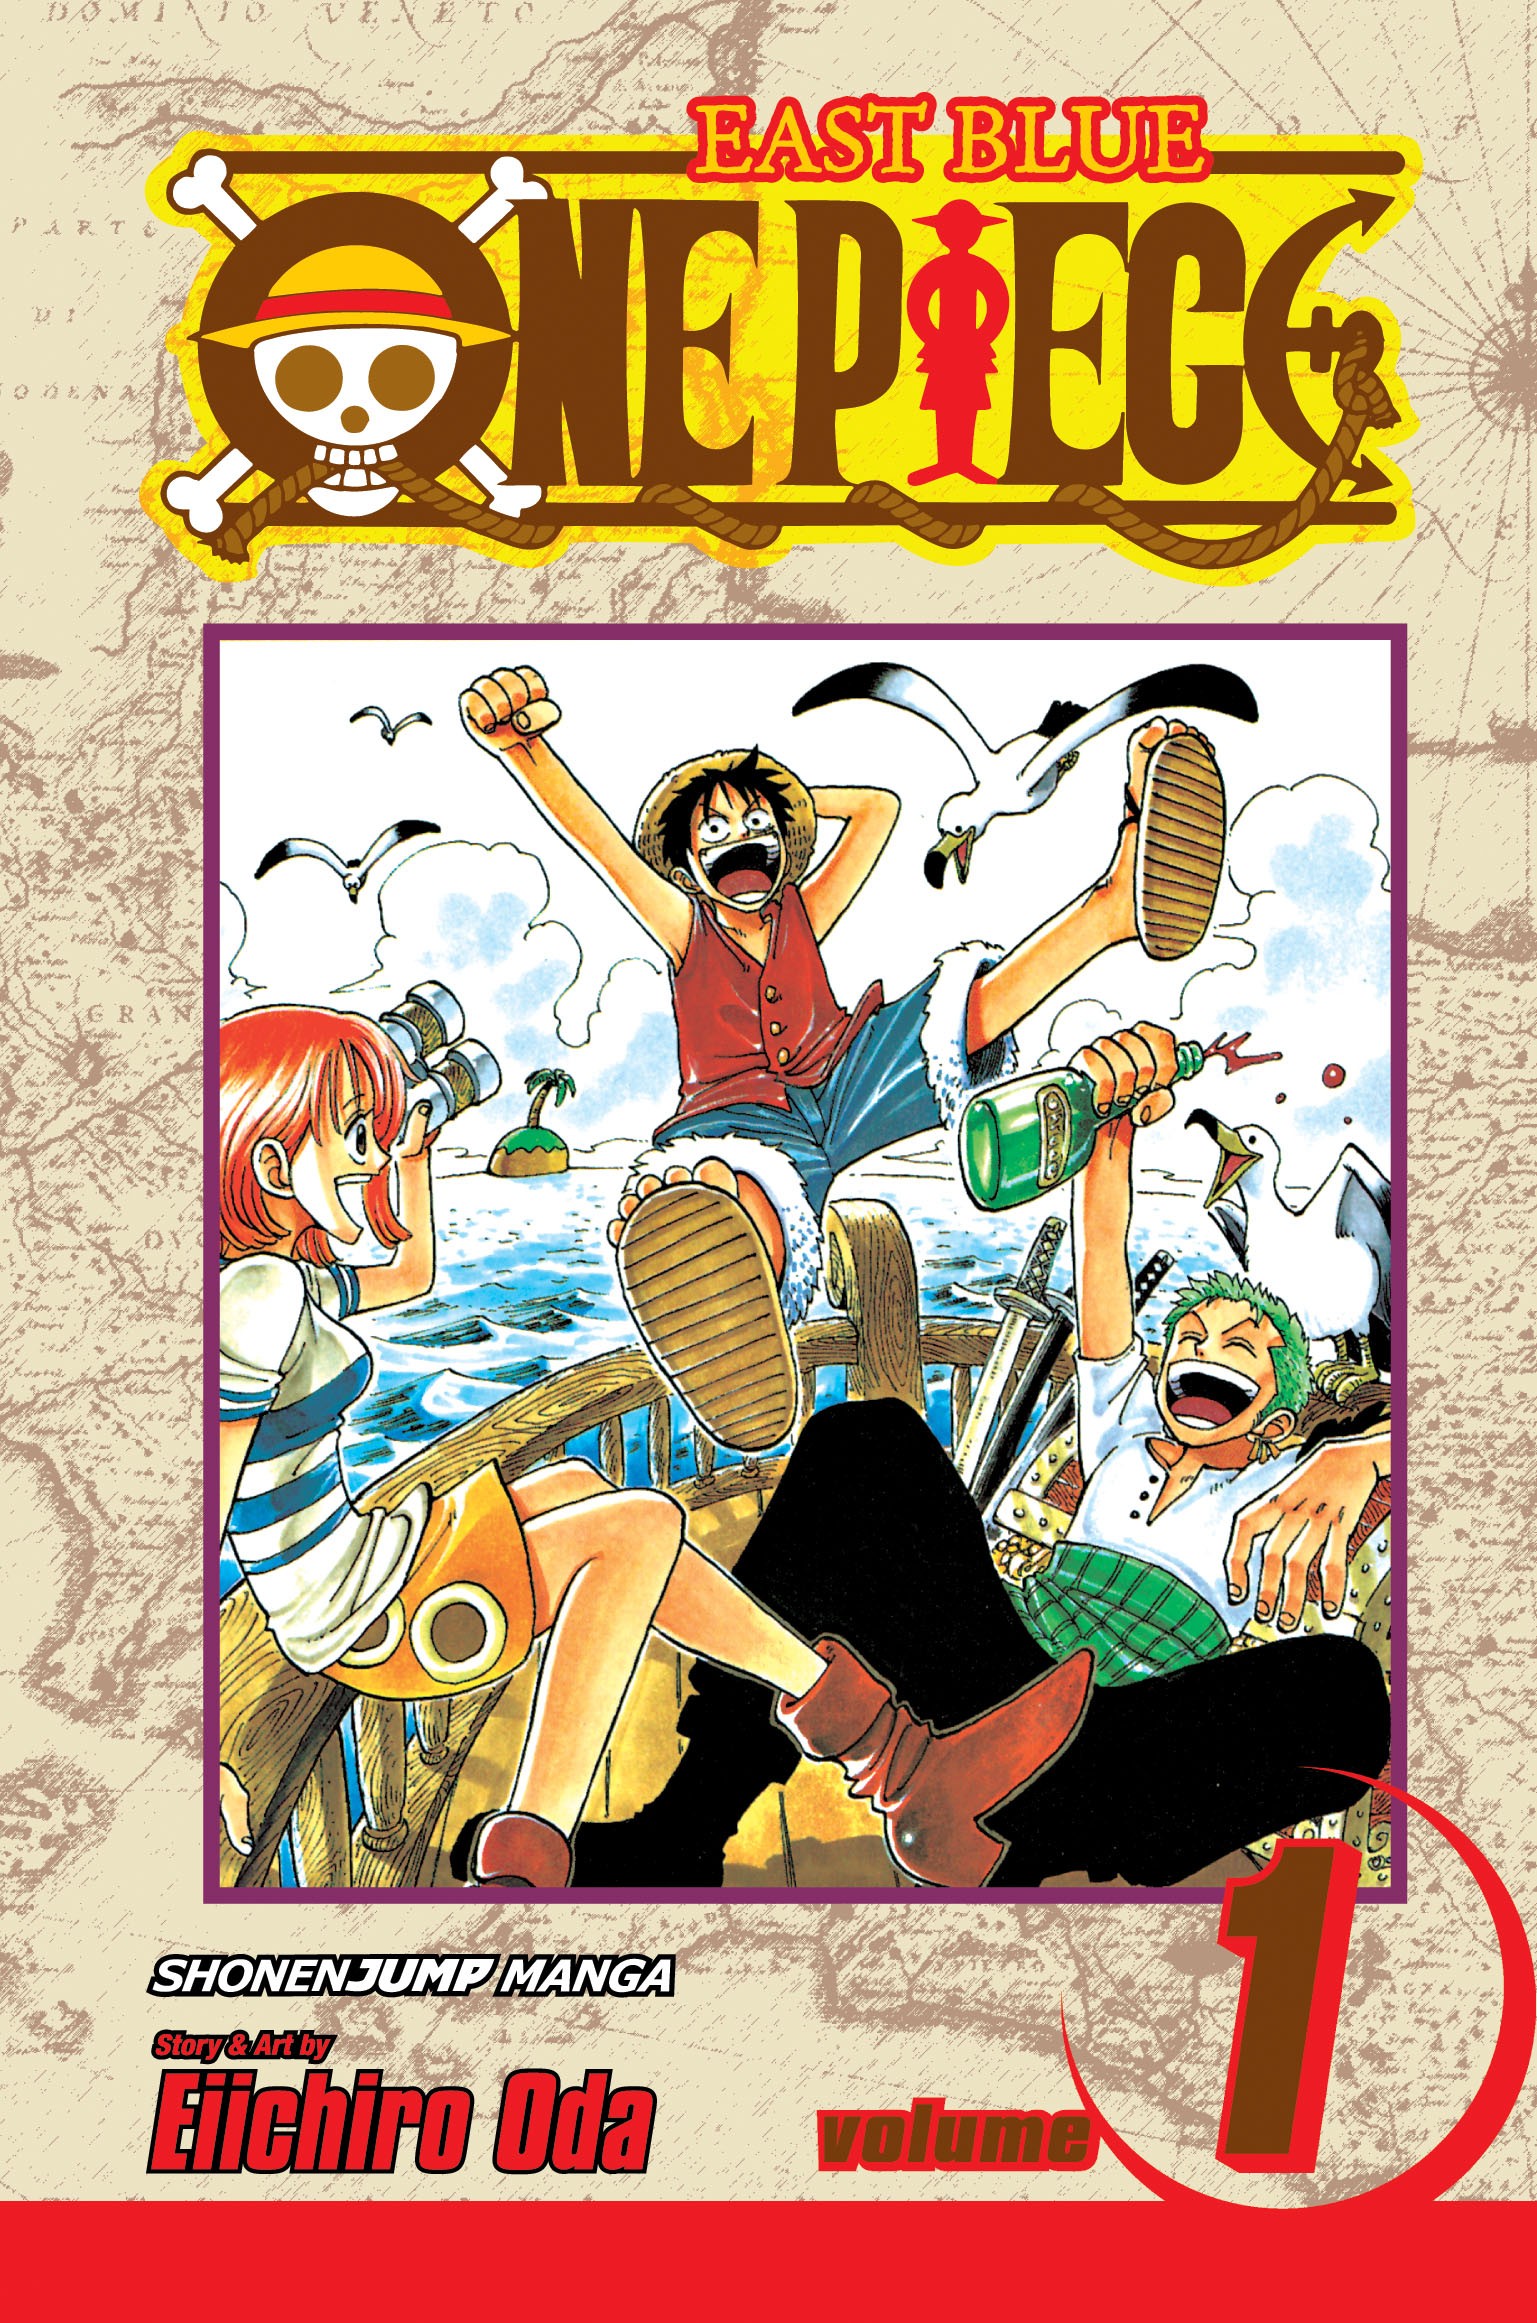 One Piece, Vol. 01